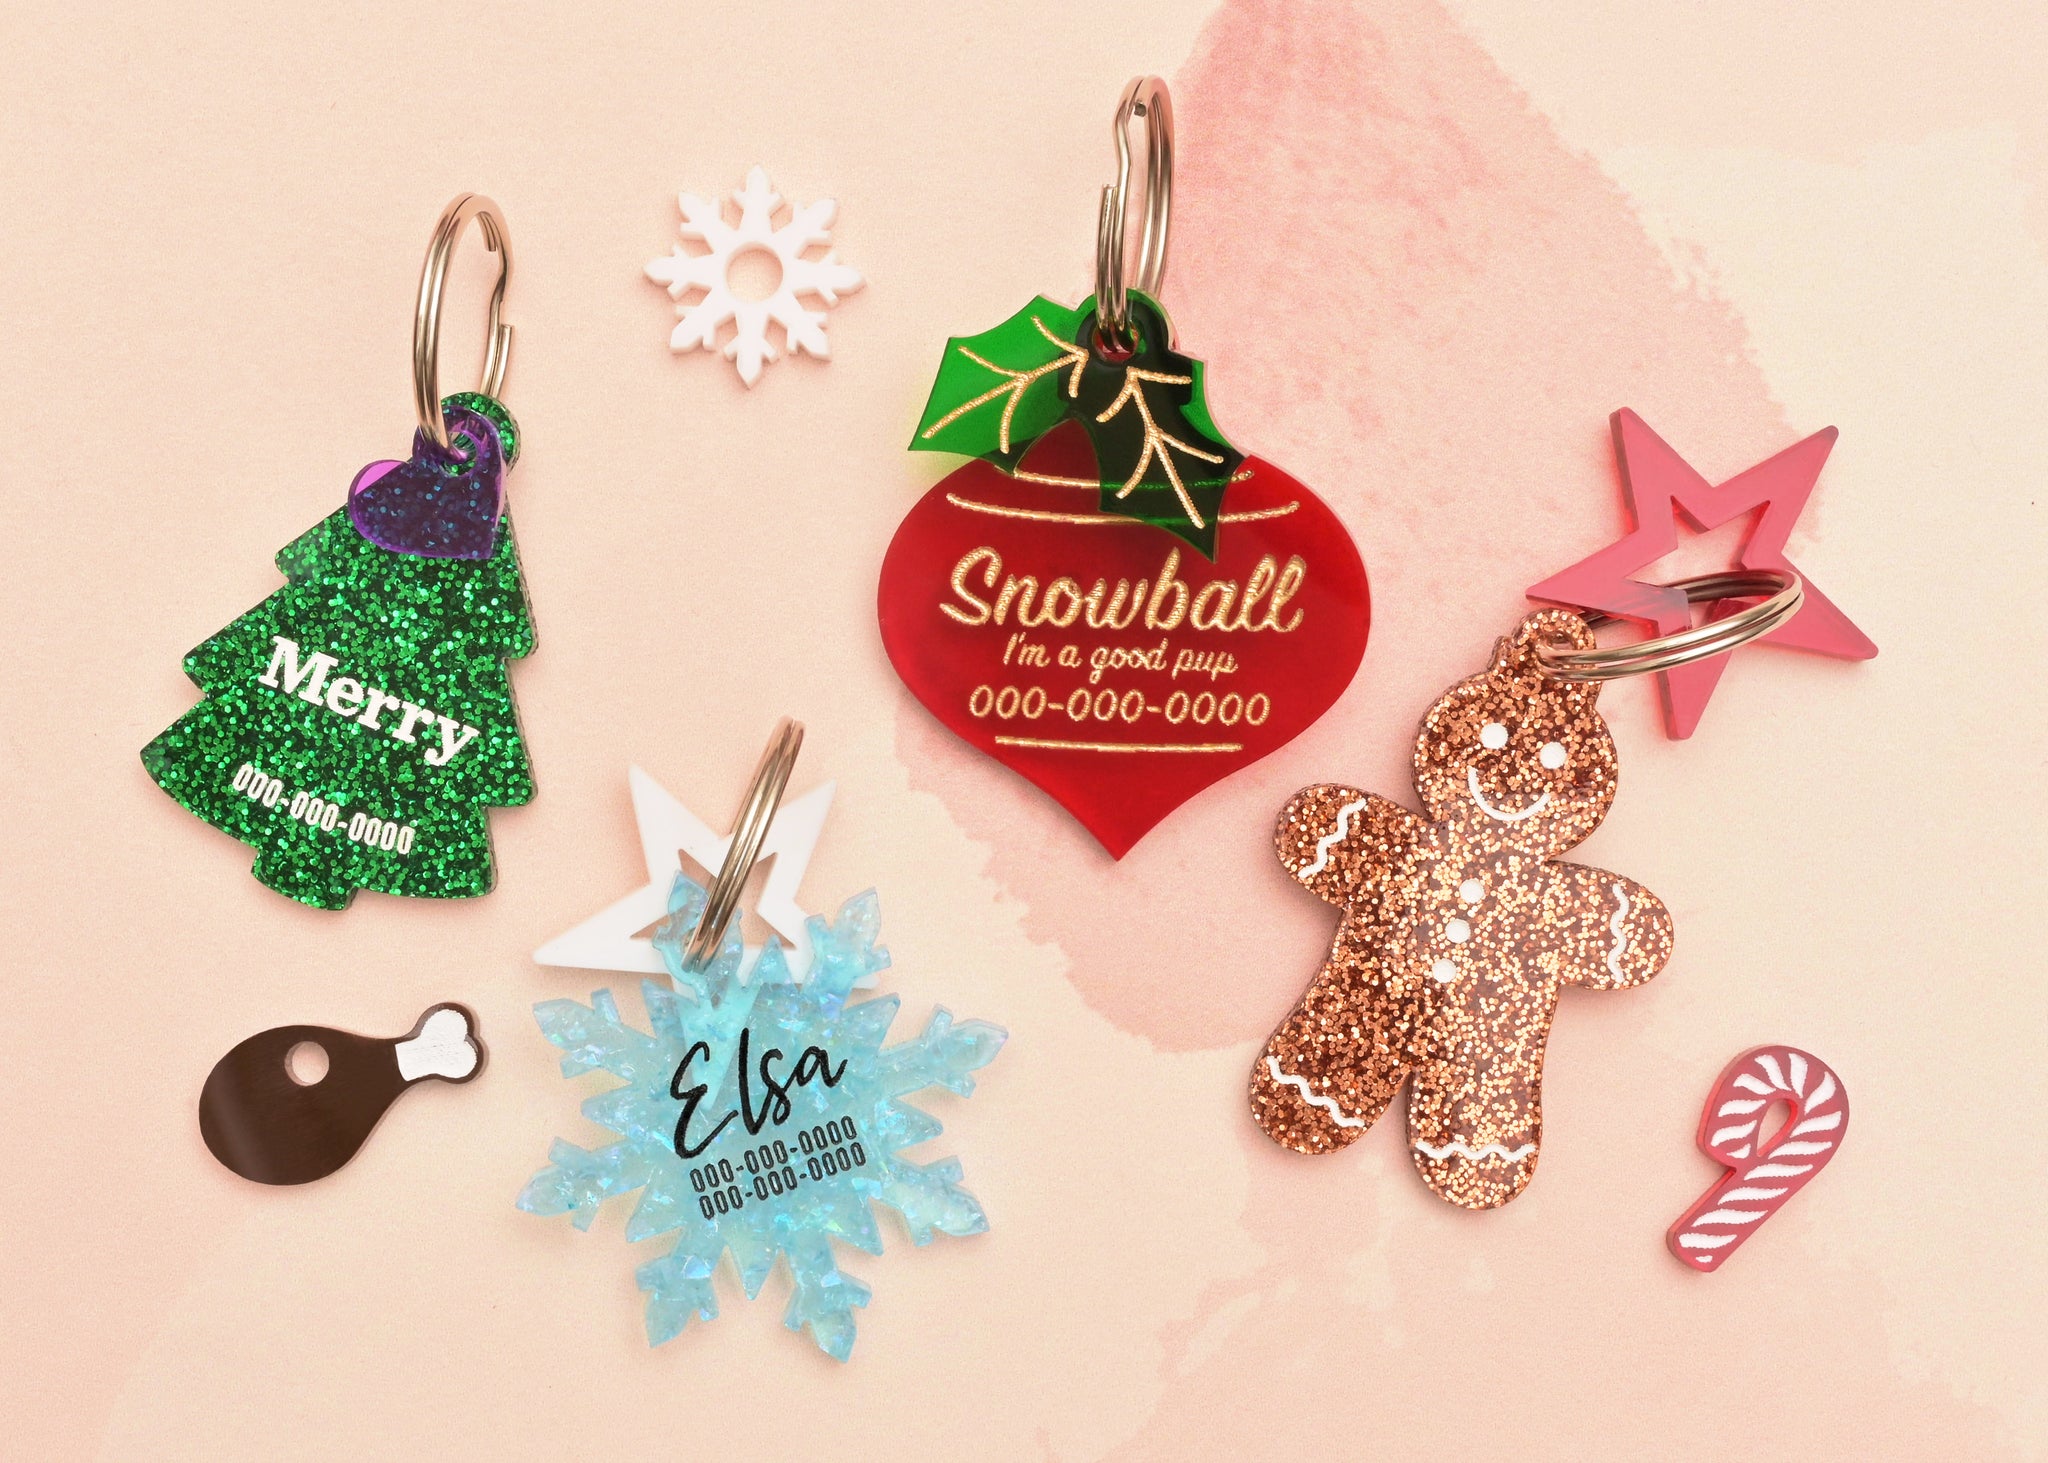 Etiquetas para mascotas navideñas, accesorios para mascotas de invierno, etiqueta para mascotas del árbol de Navidad, enlace a etiquetas para mascotas navideñas